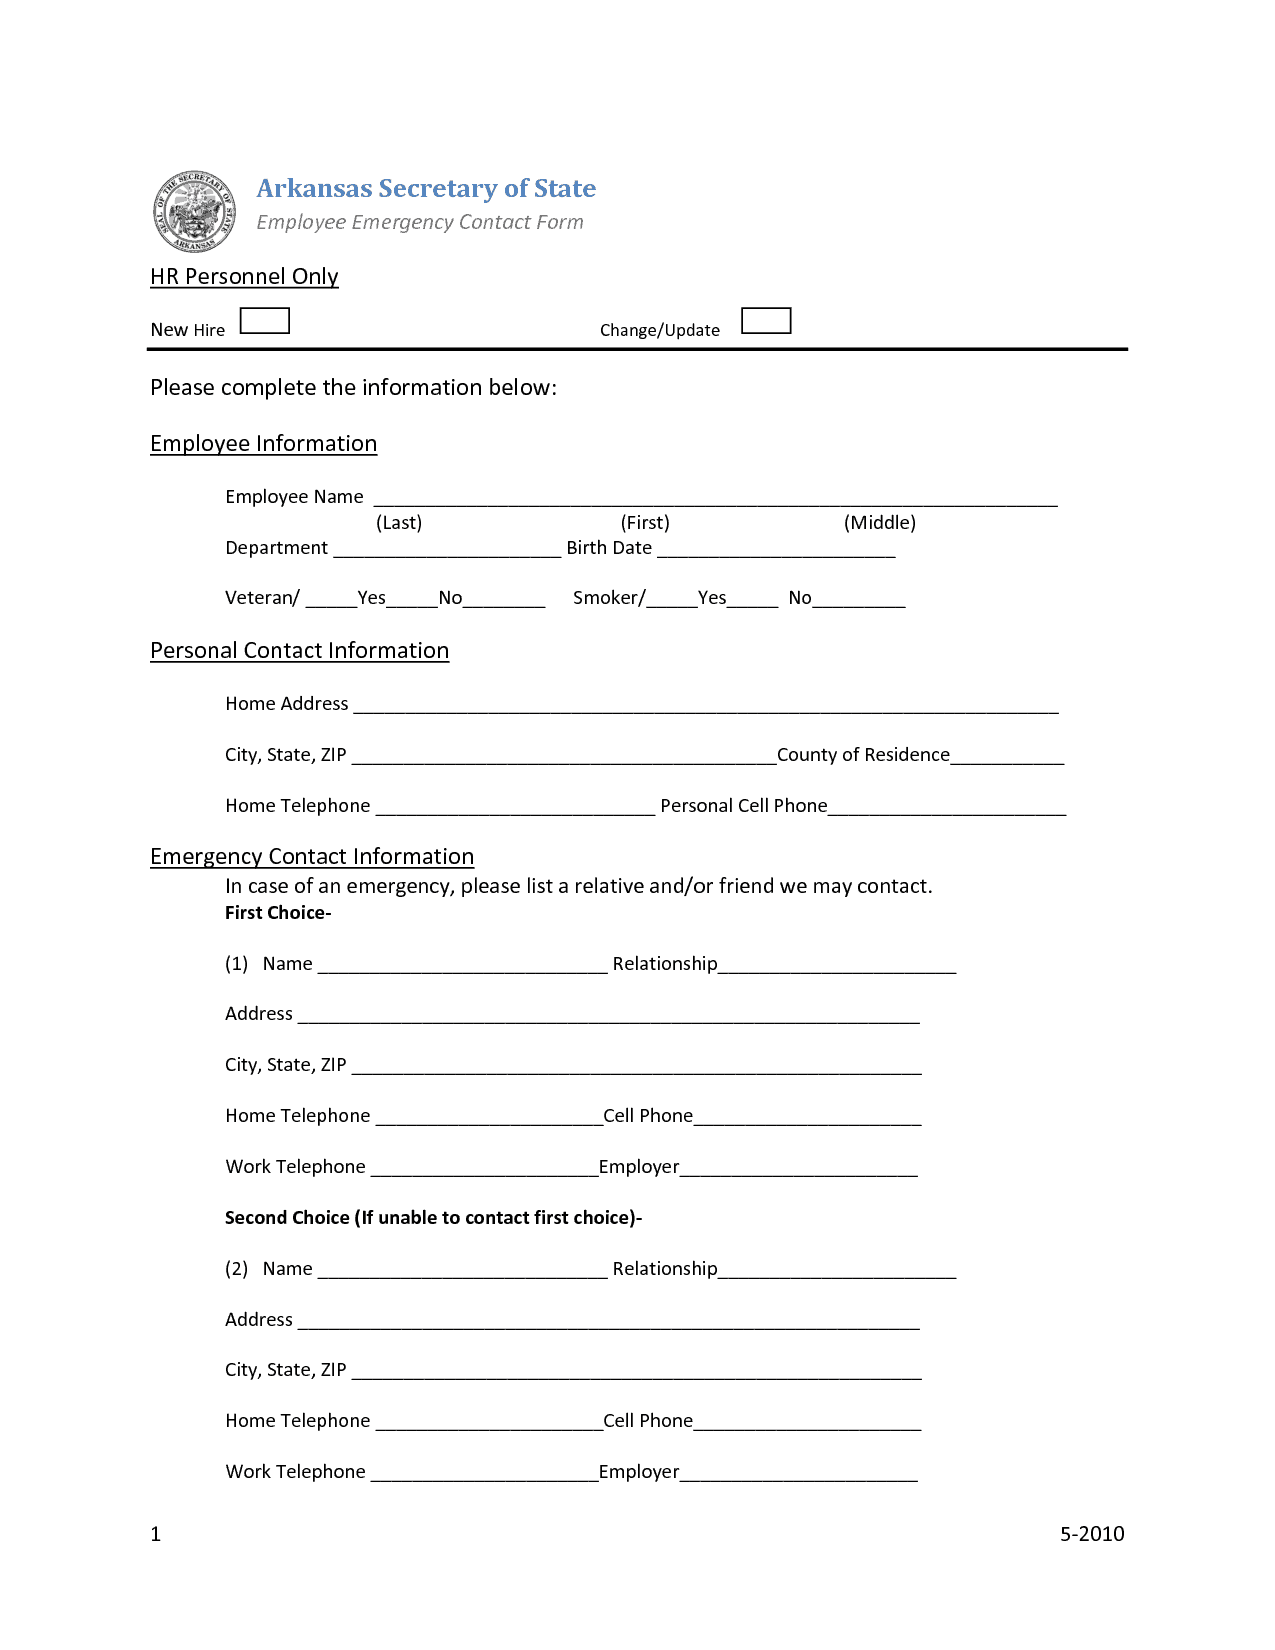 Employee Emergency Contact Form 4.